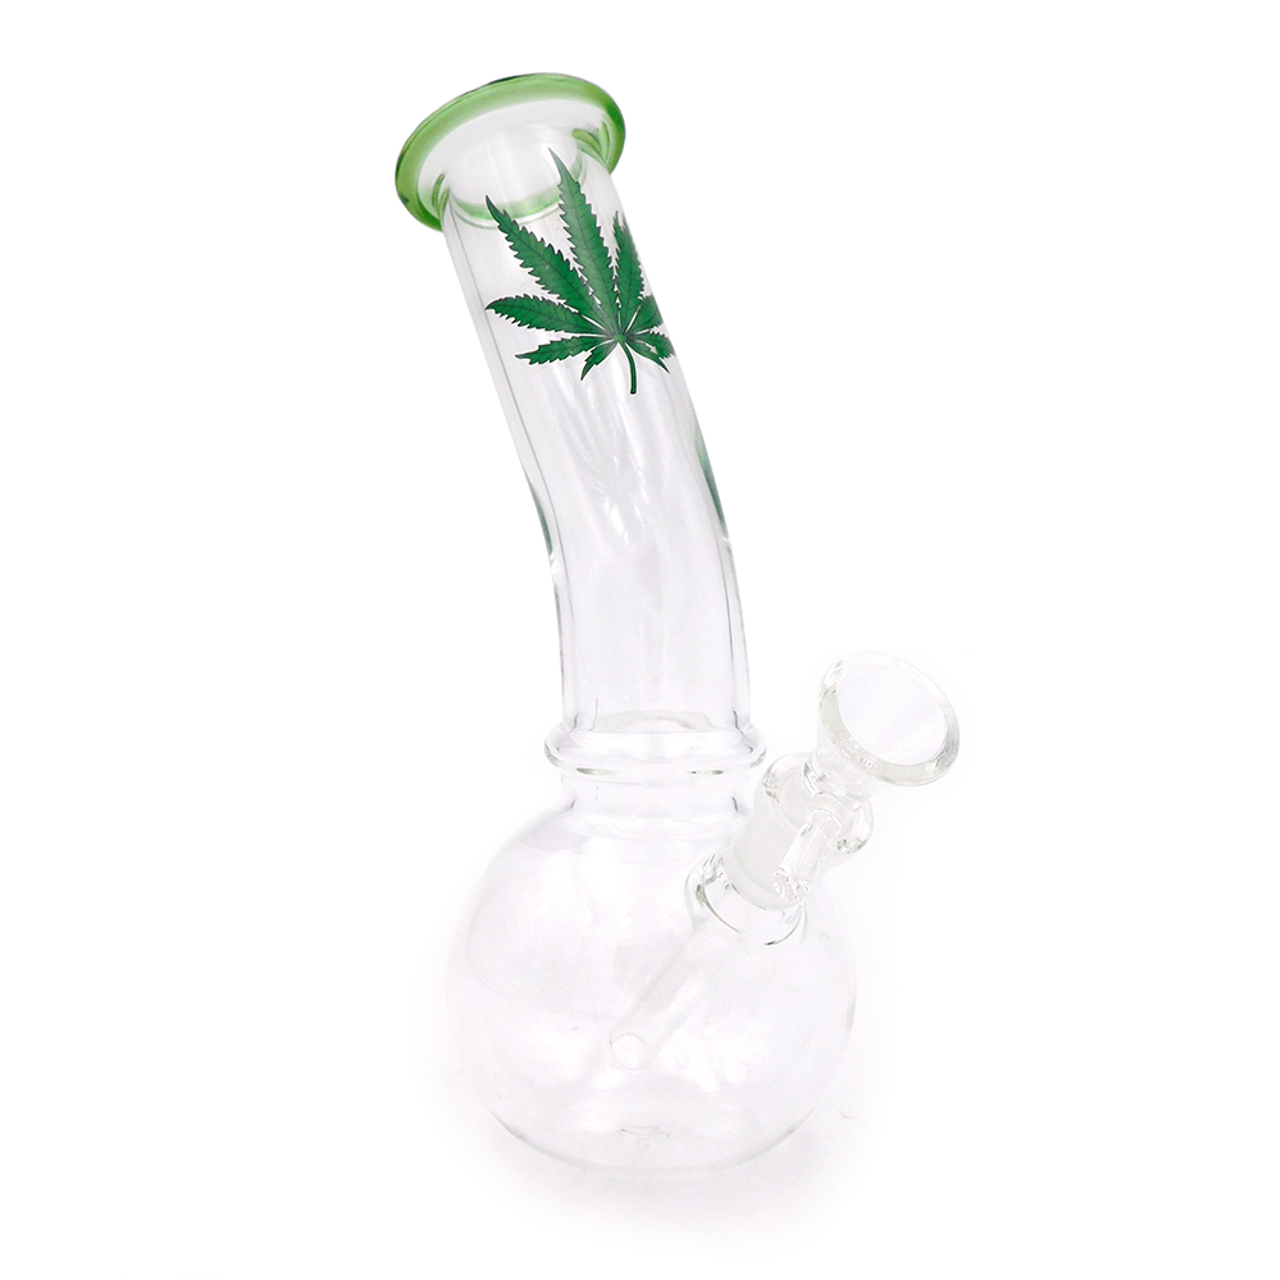 Clear Glass Bong. Smoking Marijuana at Home Stock Image - Image of